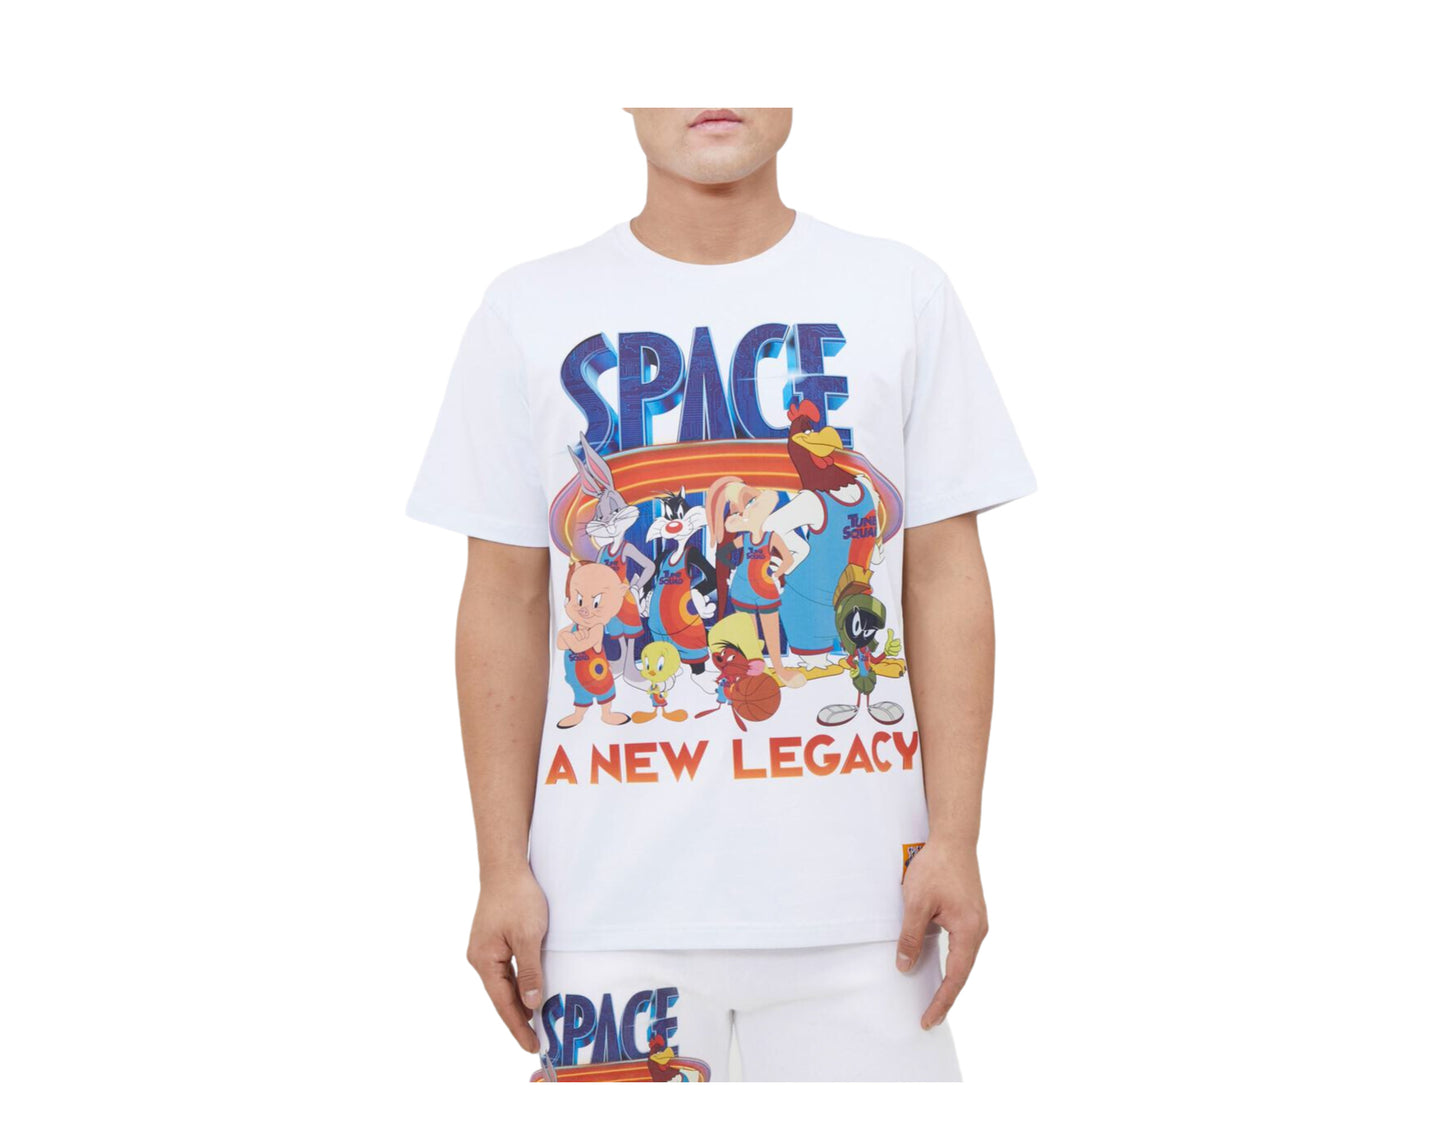 Freeze Max Space Jam 2 - A New Legacy Men's Tee Shirt